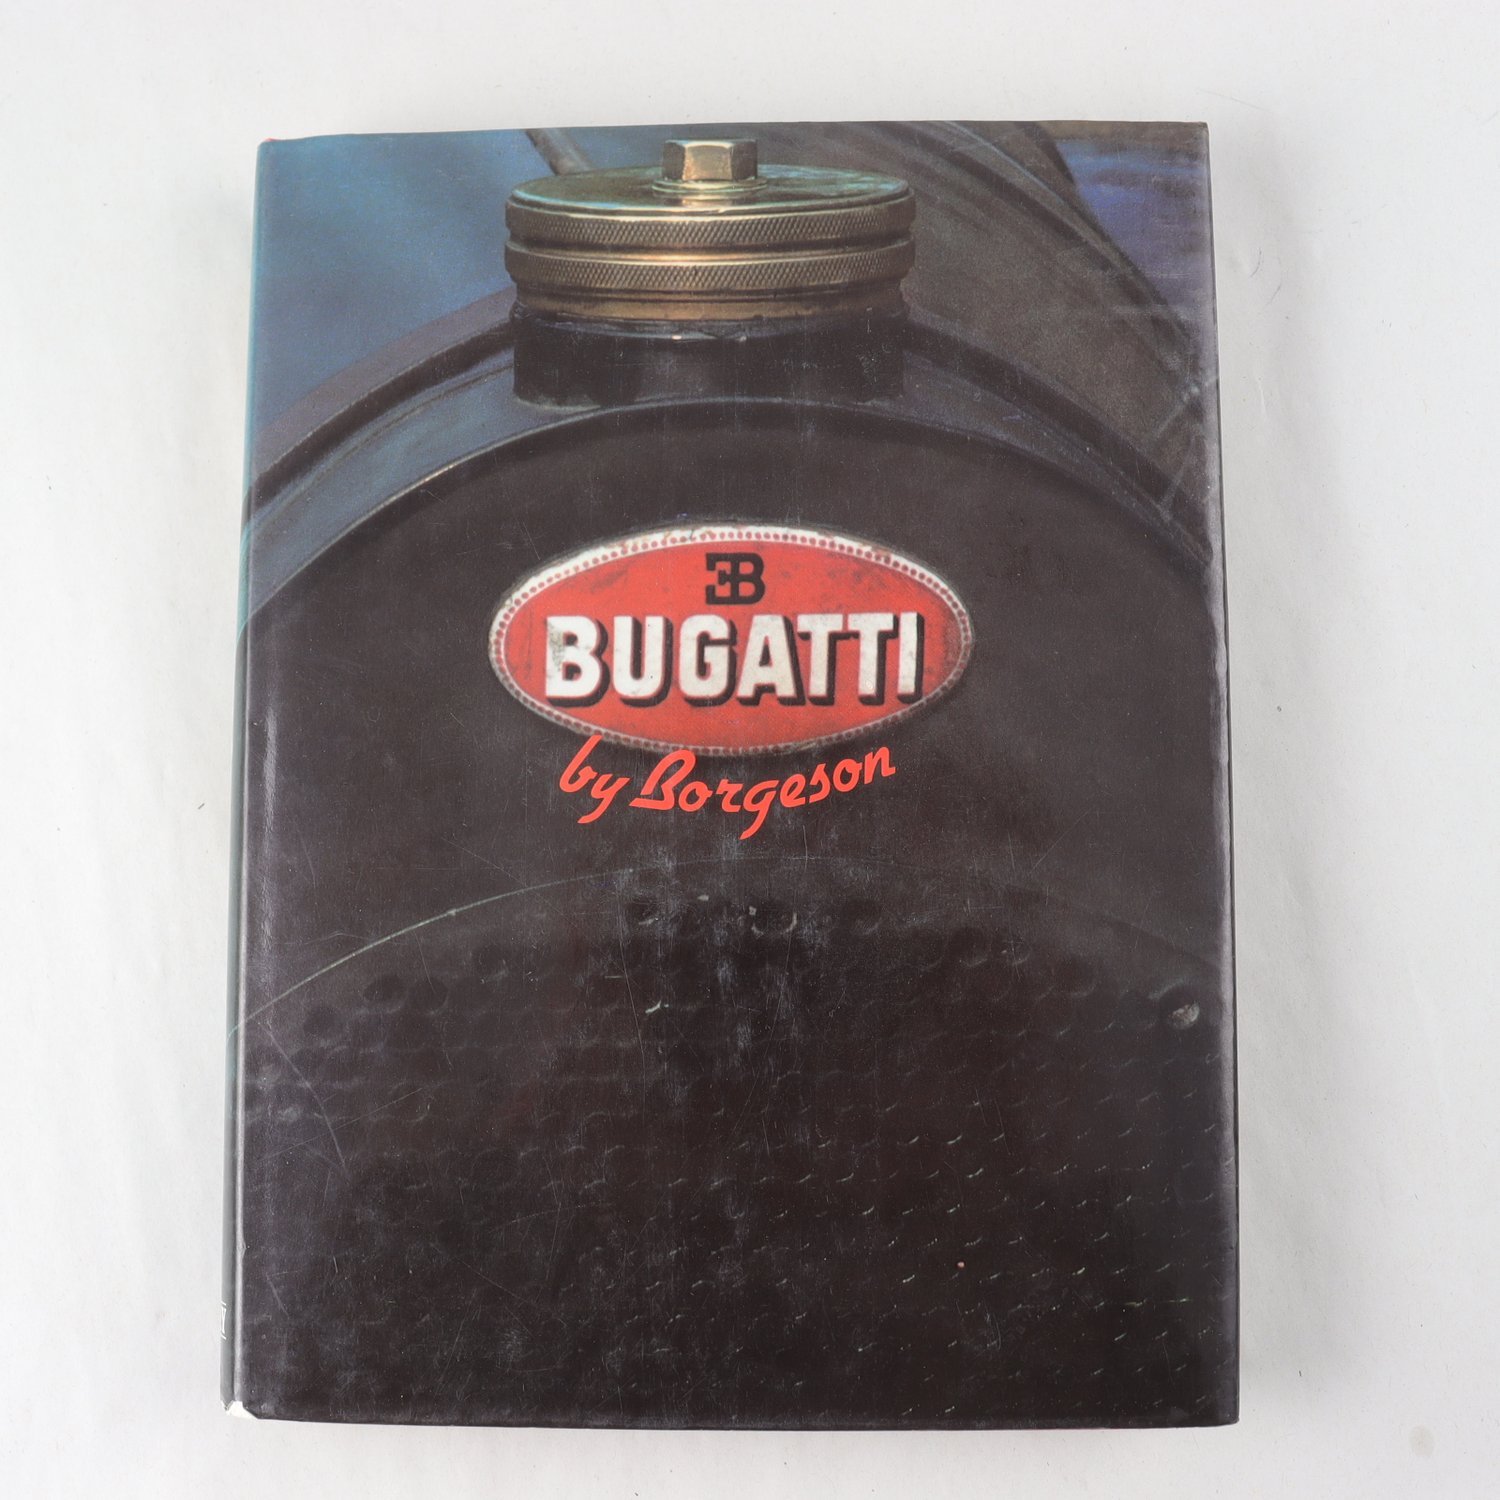 Bugatti, by Borgeson